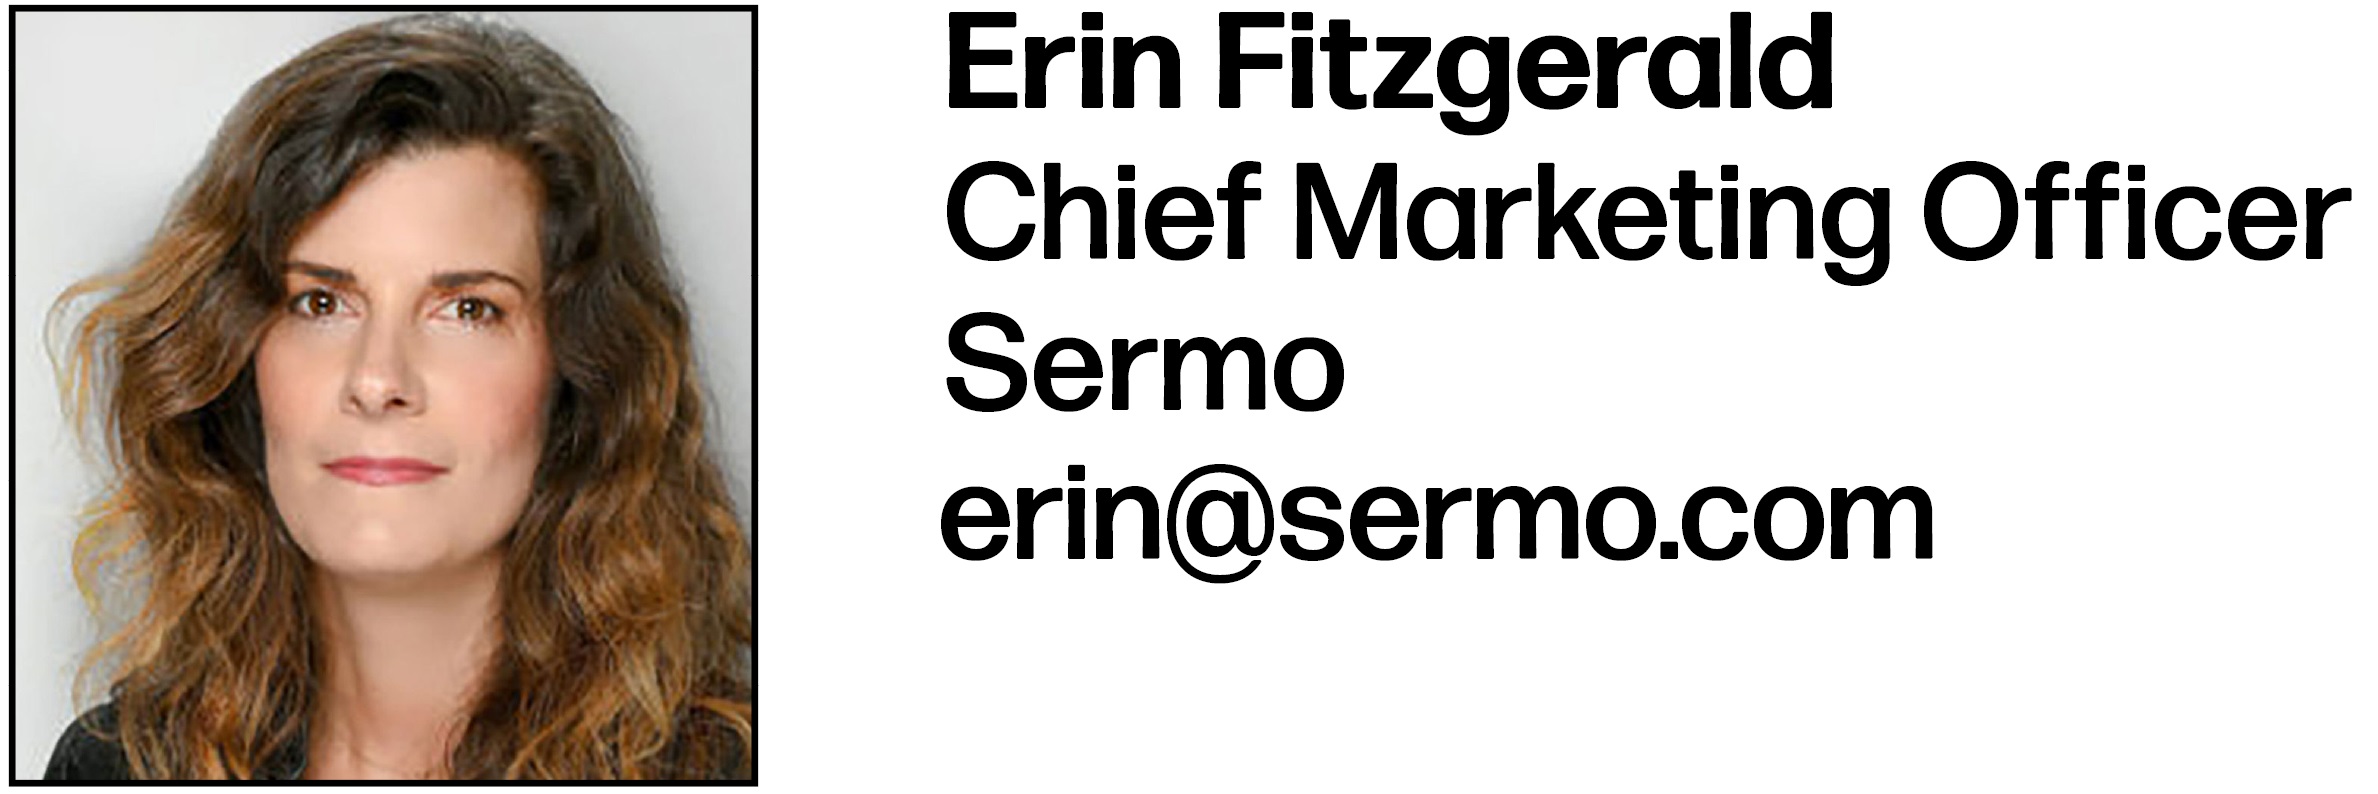 Erin Fitzgerald Chief Marketing Officer Sermo erin@sermo.com